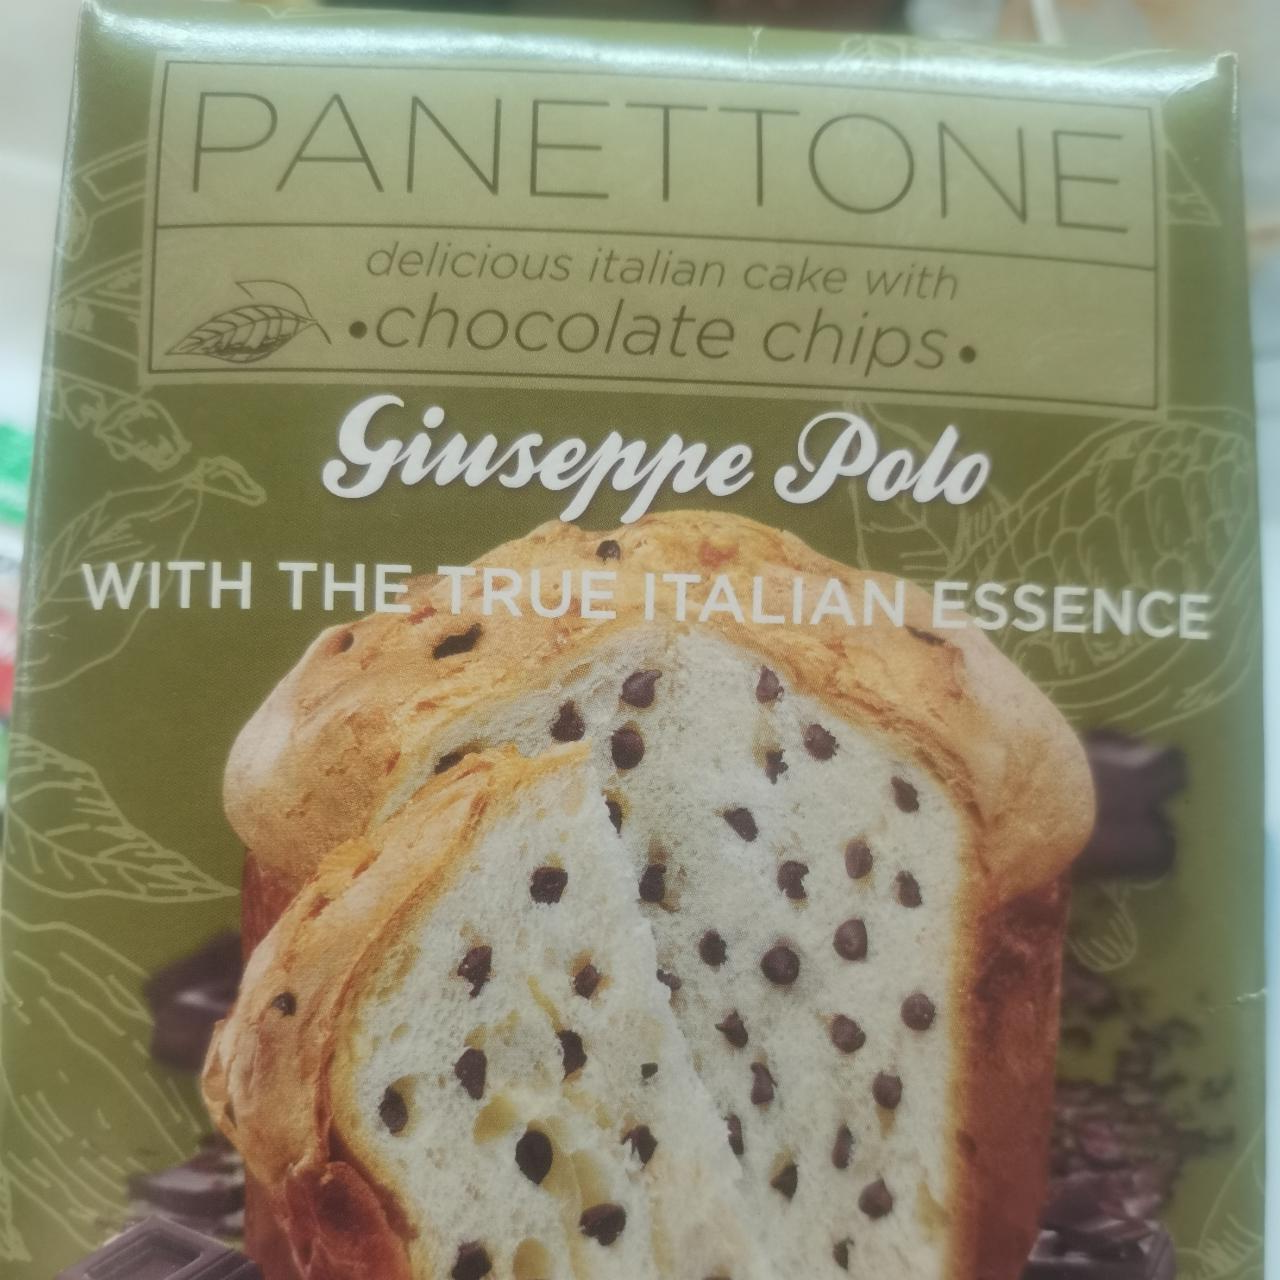 Фото - Панетоне сладкий хлеб с кусочками шоколада Giuseppe Polo